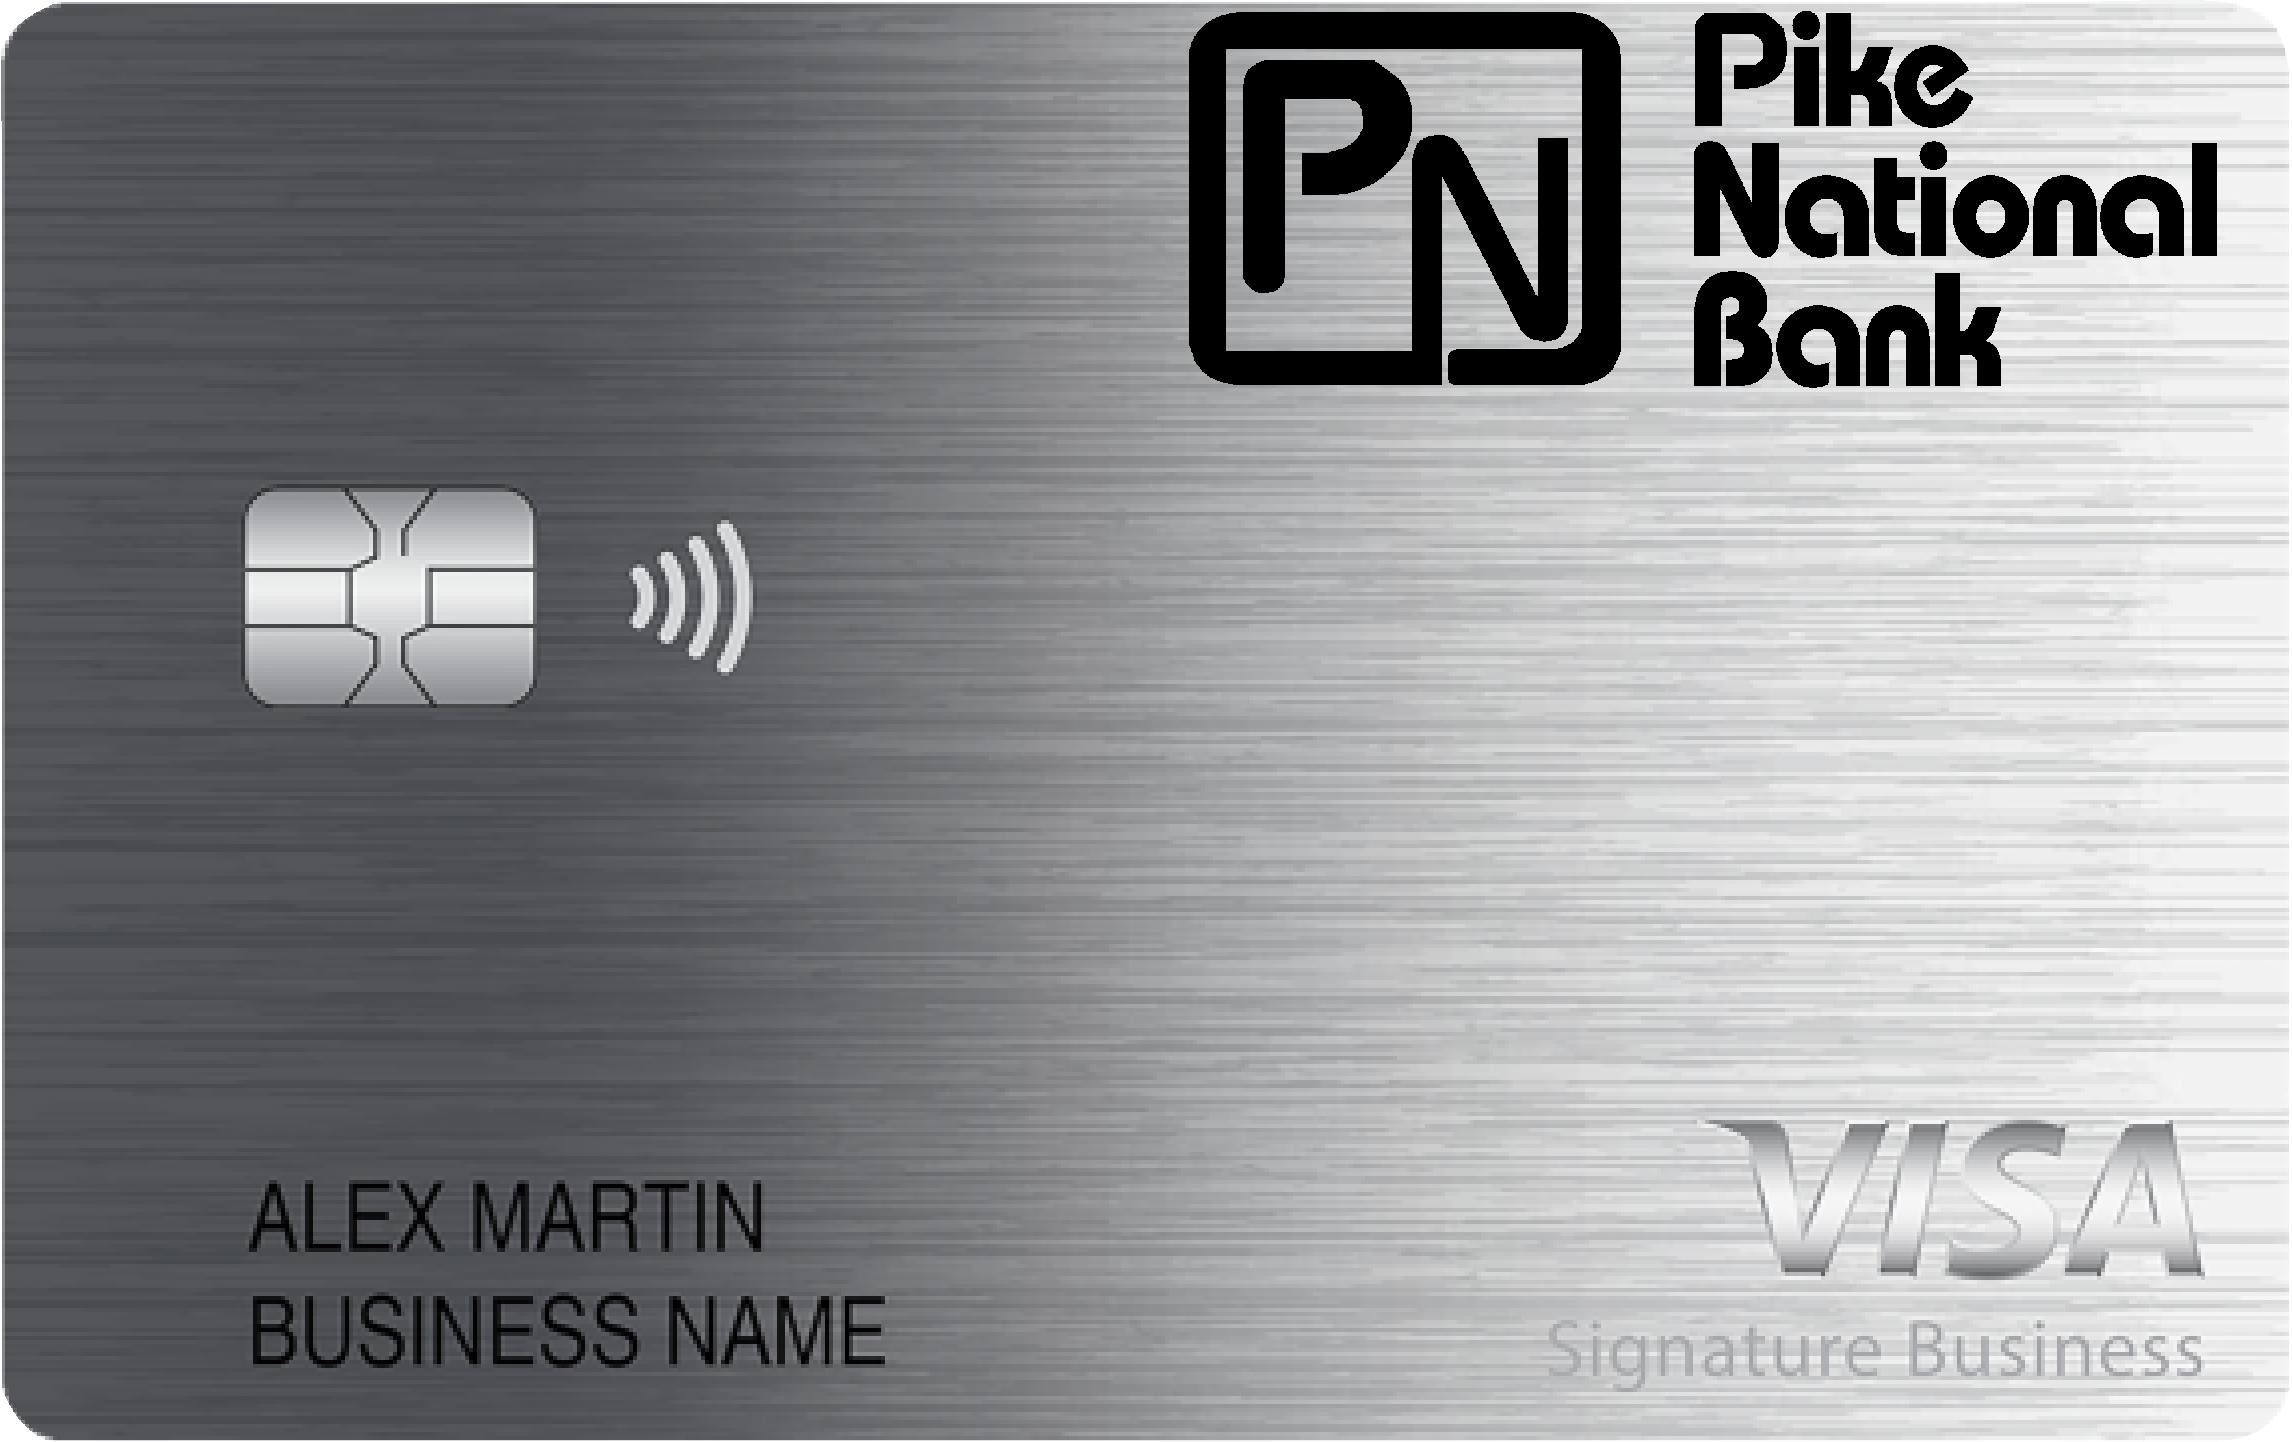 Pike National Bank Smart Business Rewards Card